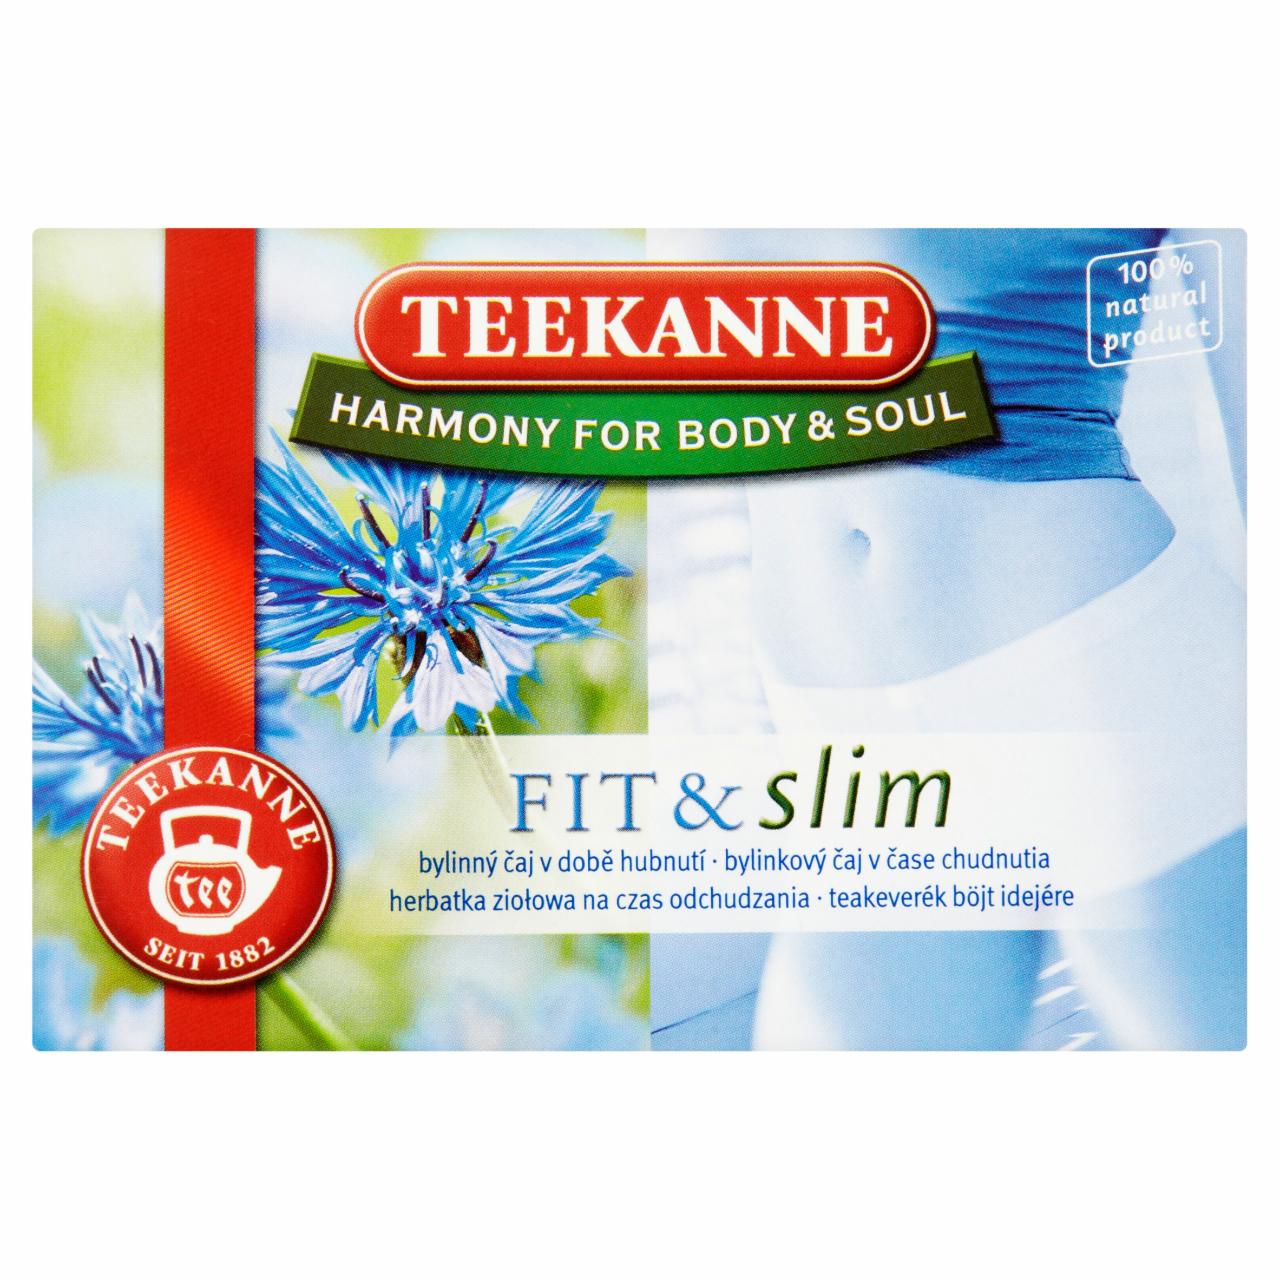 Képek - Teekanne Harmony for Body & Soul Fit & Slim teakeverék böjt idejére 16 teatasak 32 g